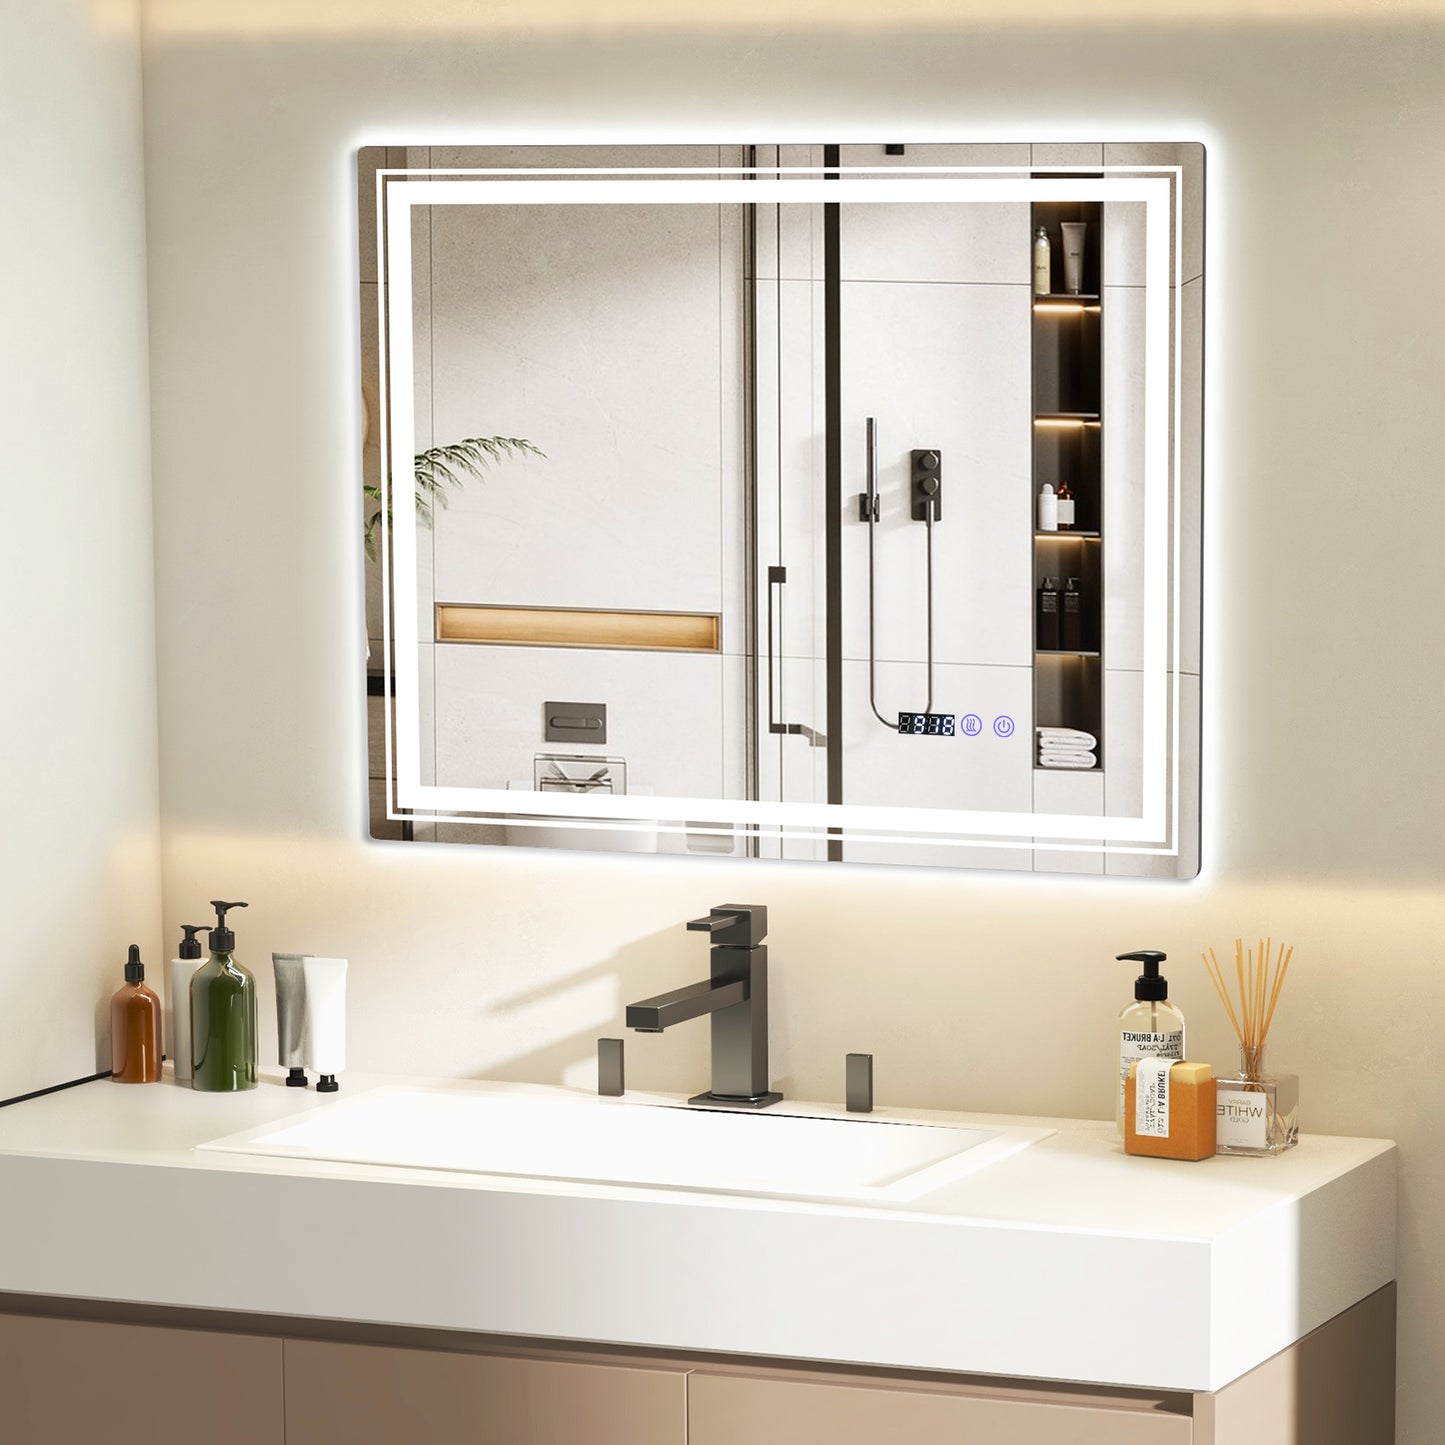 Defogging LED Bathroom Mirror with Memory Function and Anti-Fog-L